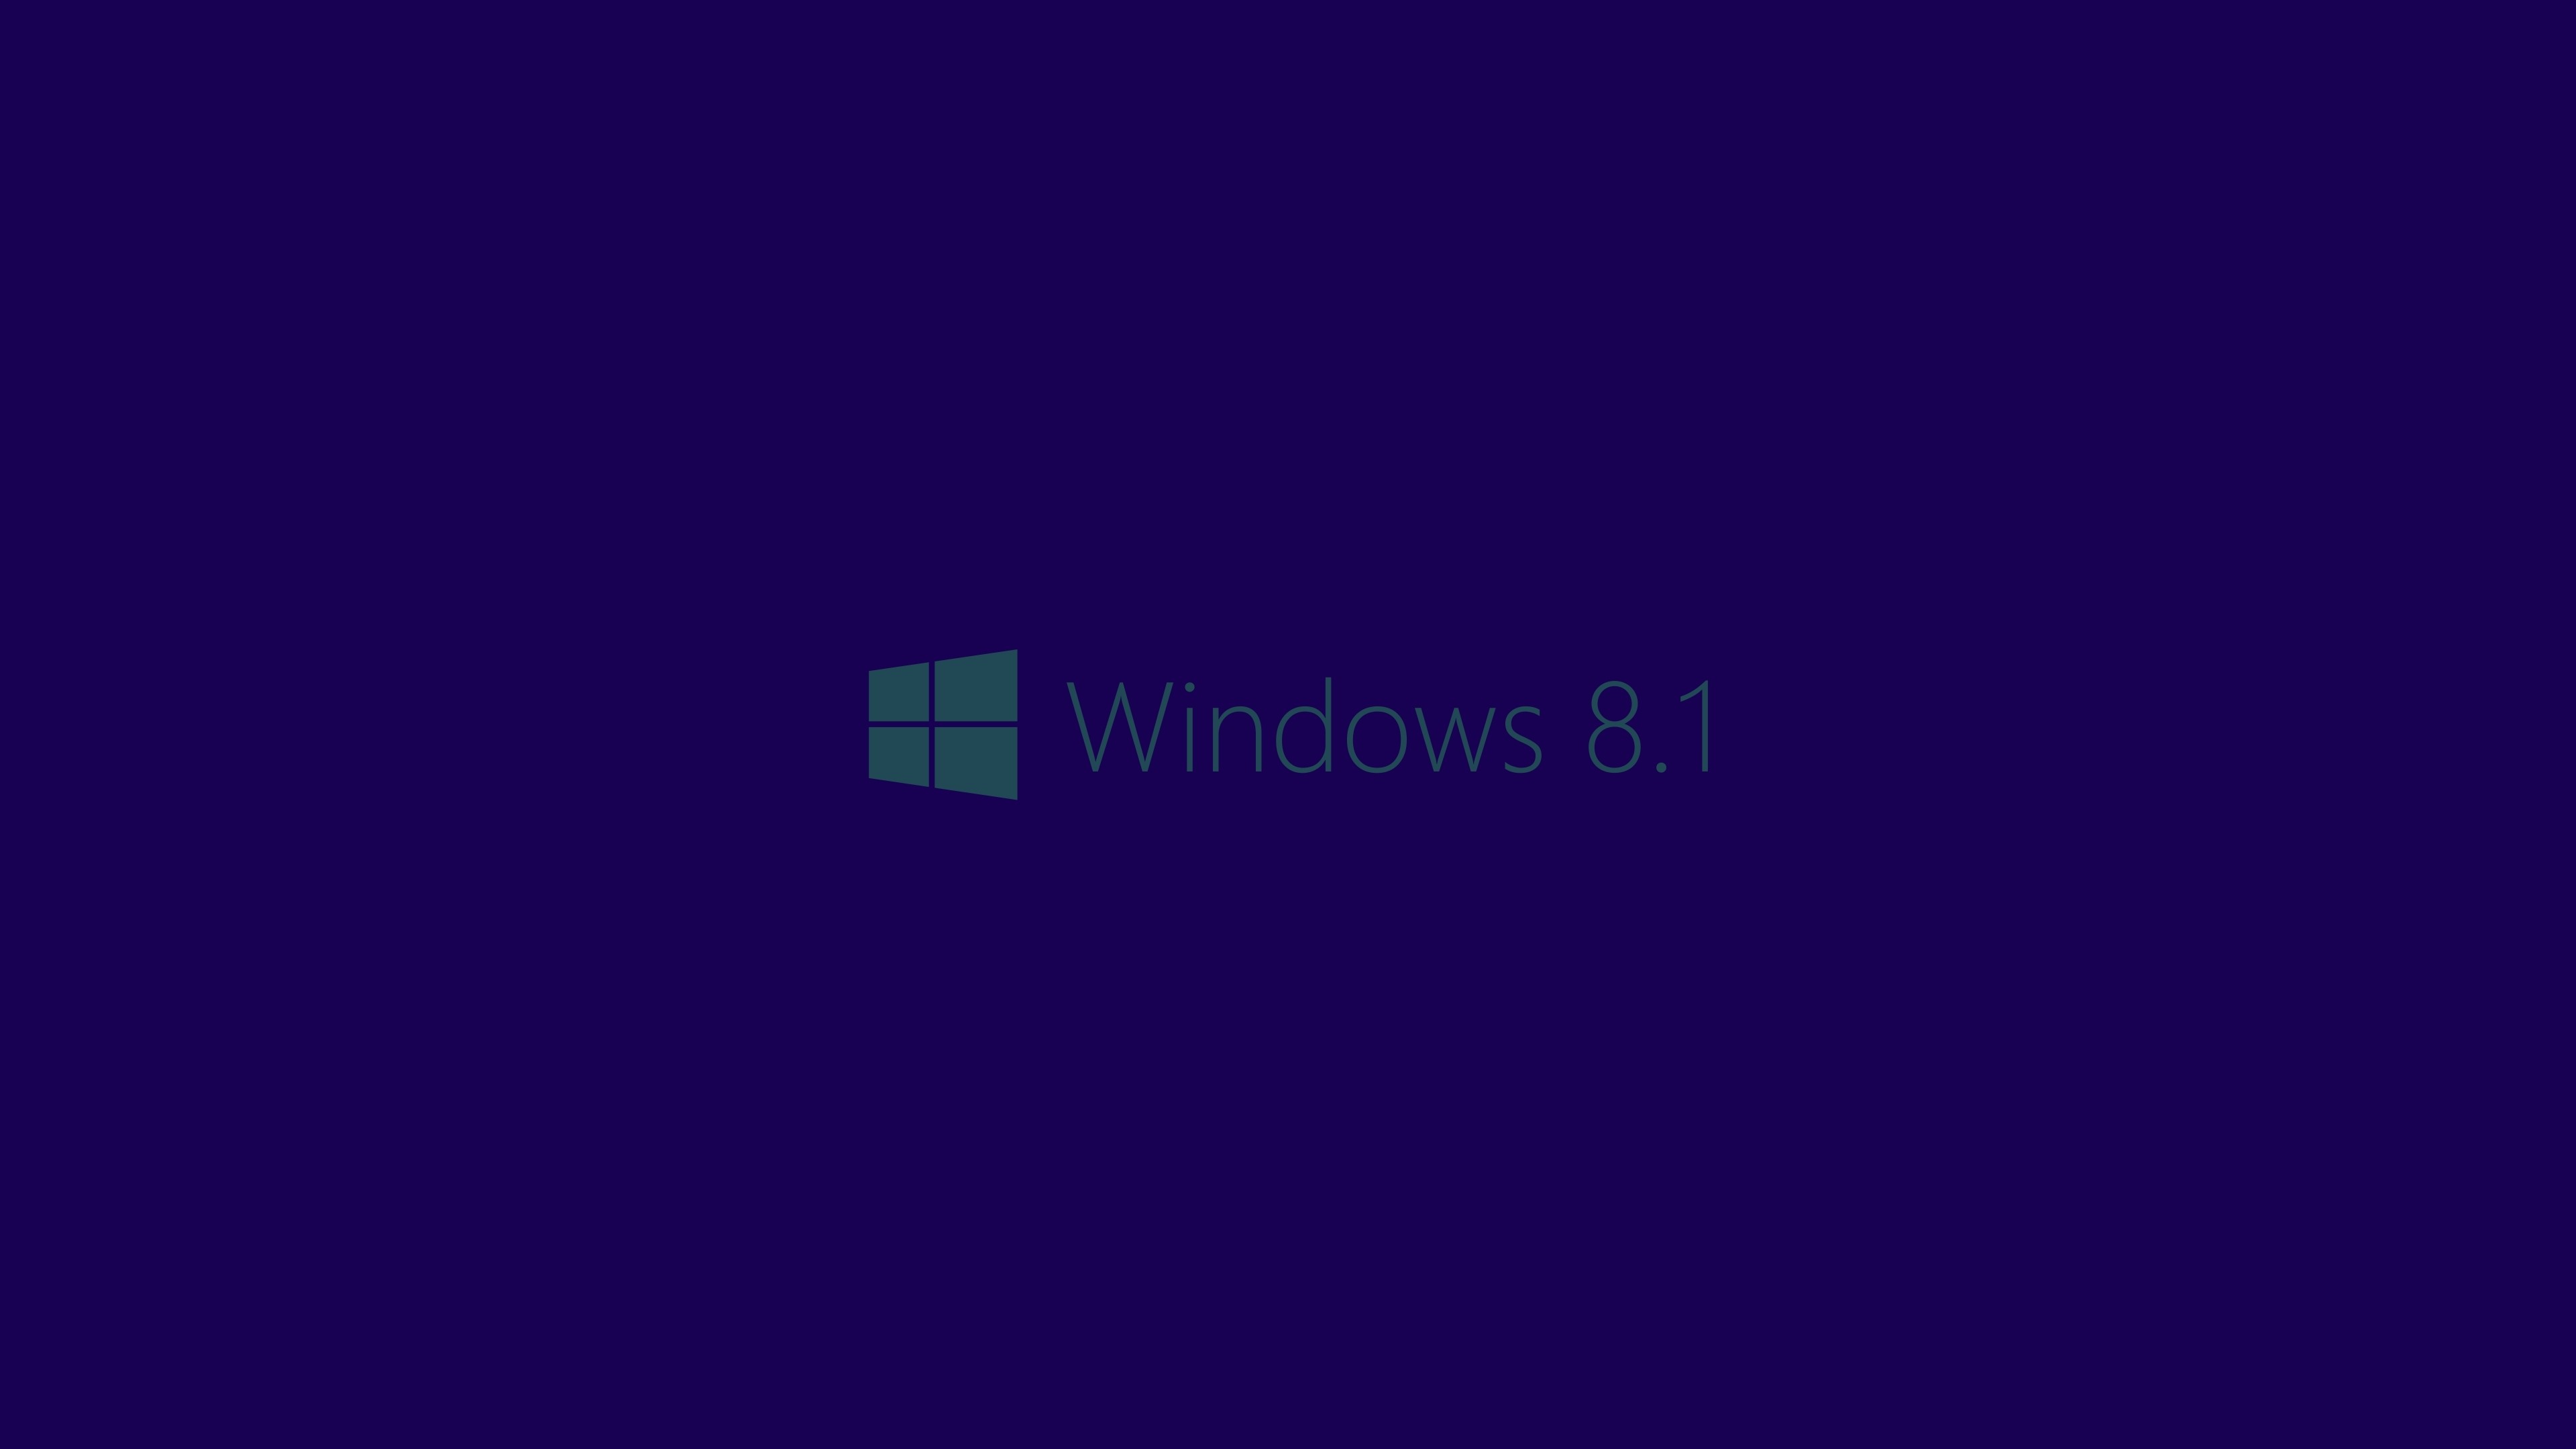 3840x2160 ... windows-8-1-fon-siniy-logotip ...